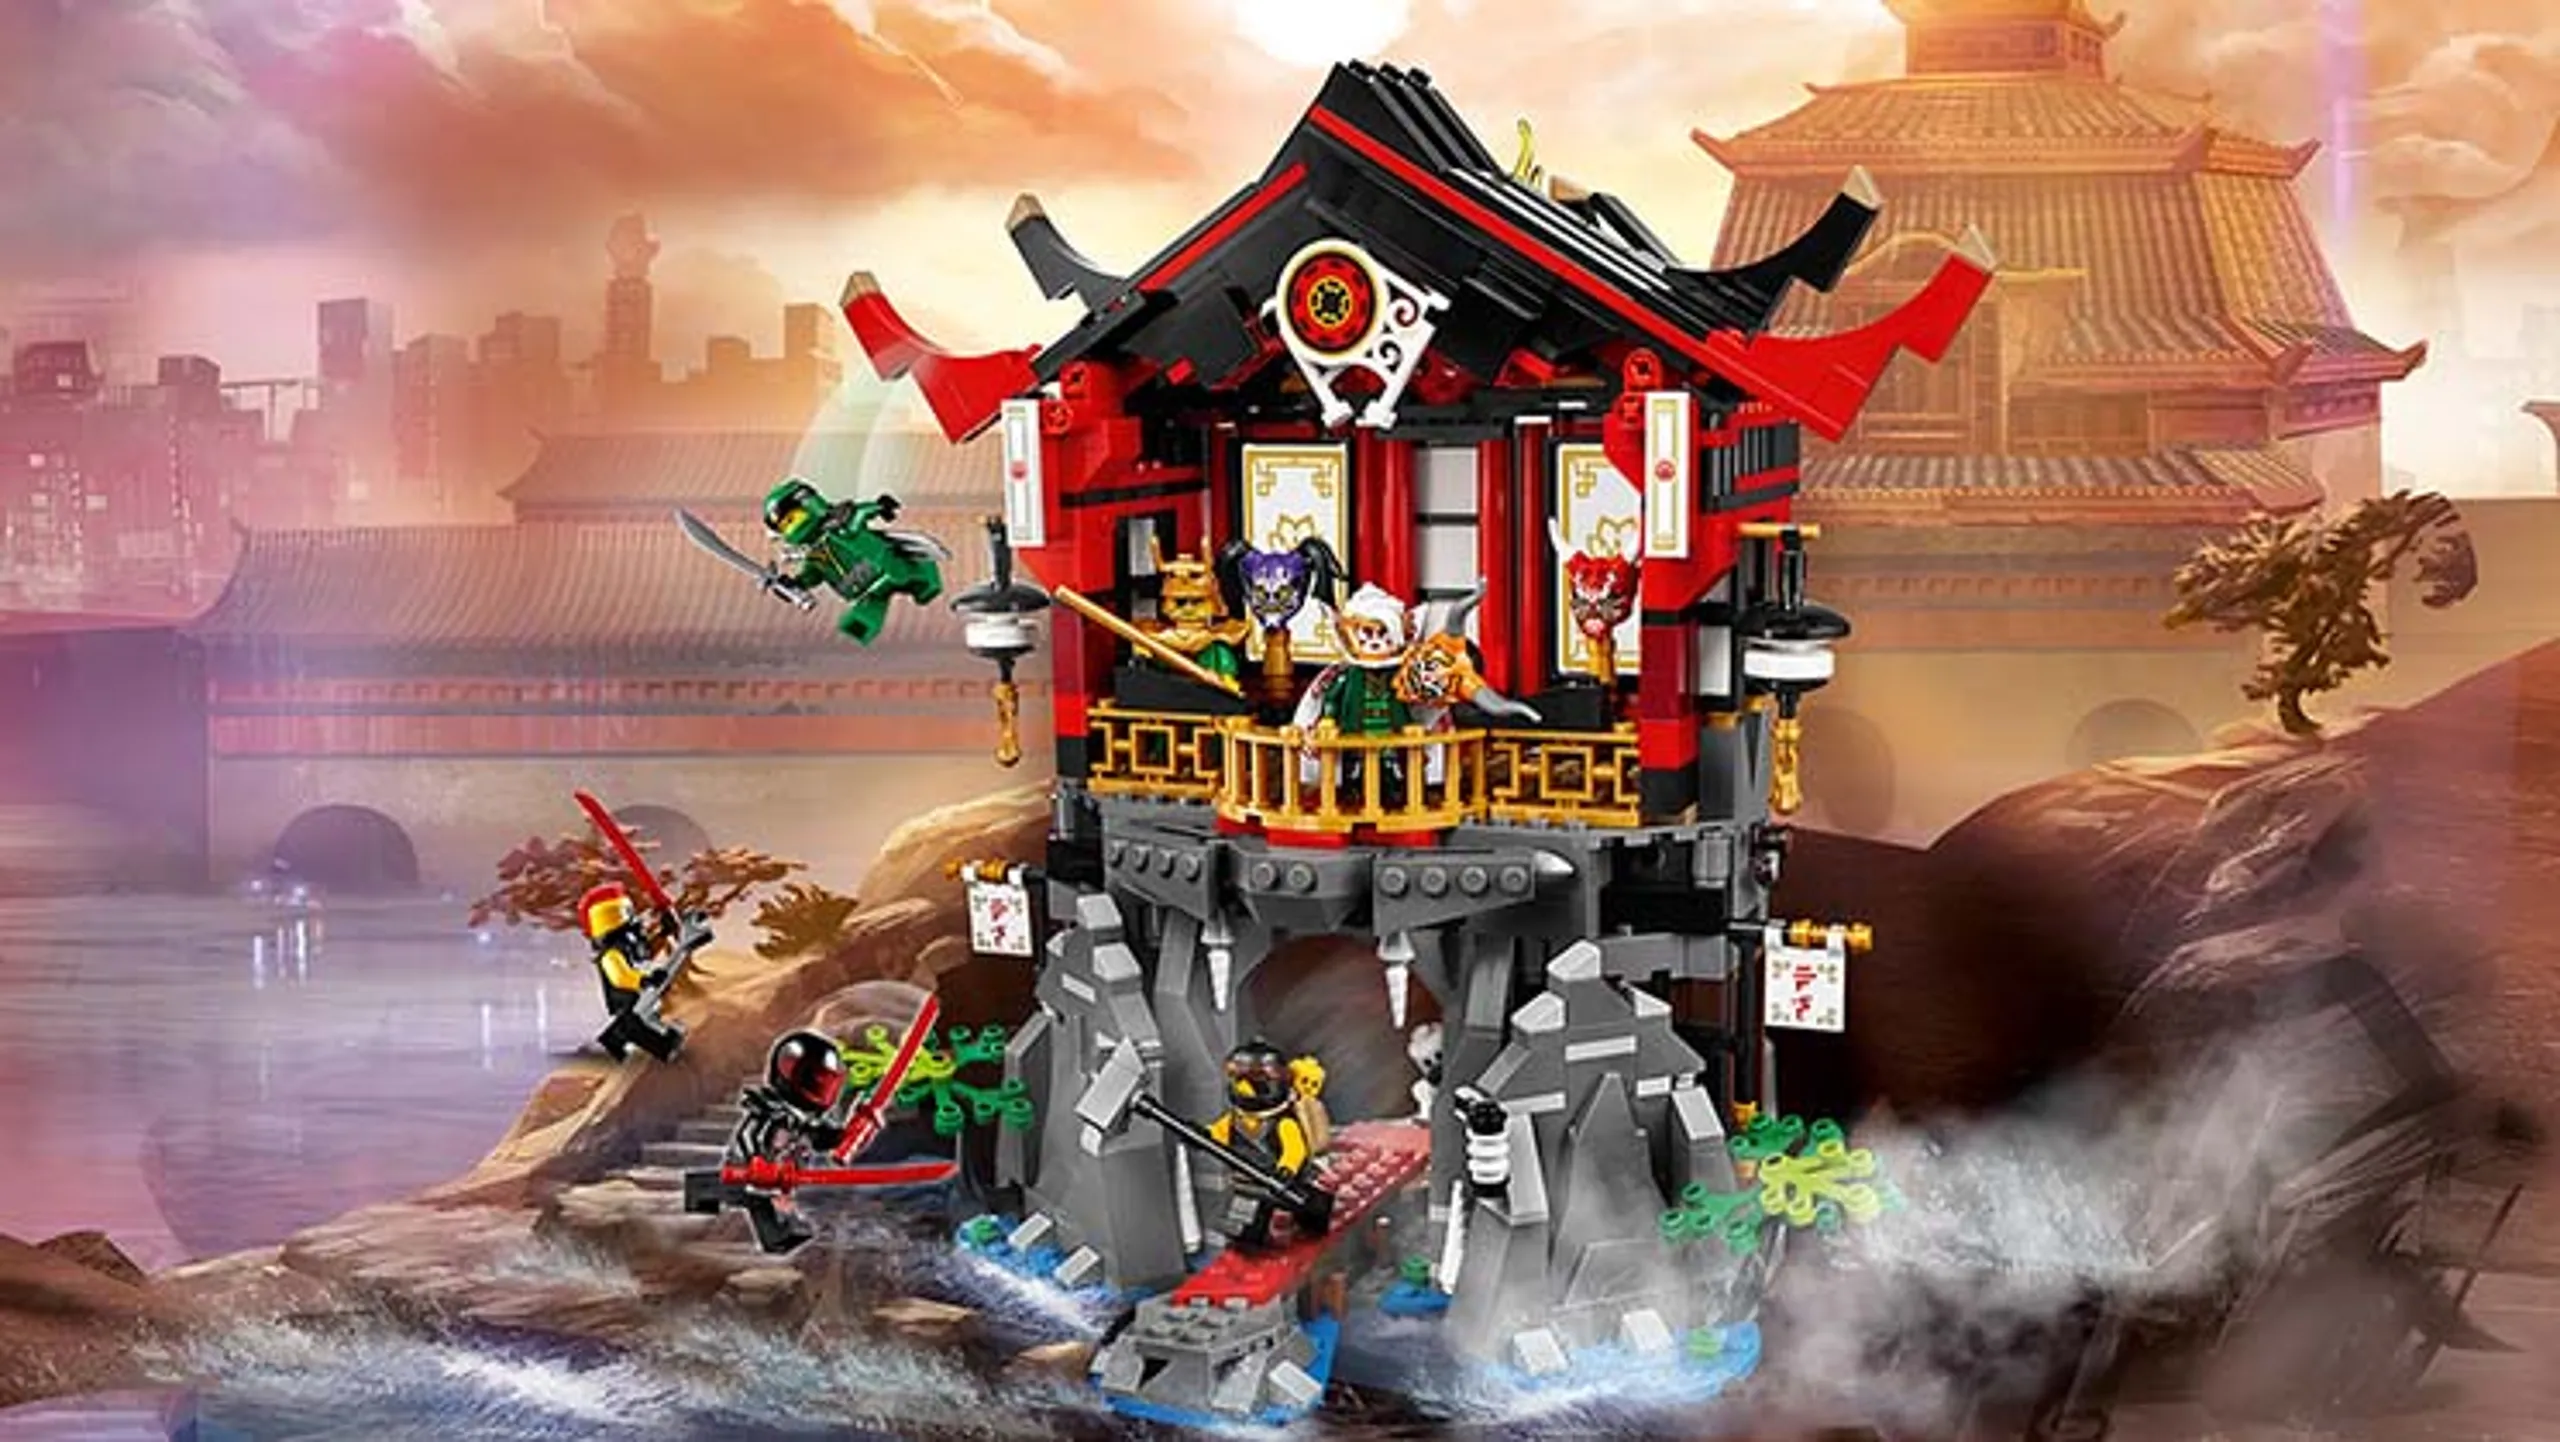 LEGO NINJAGO Temple of Resurrection - 70643 - Explore the Temple of Resurrection